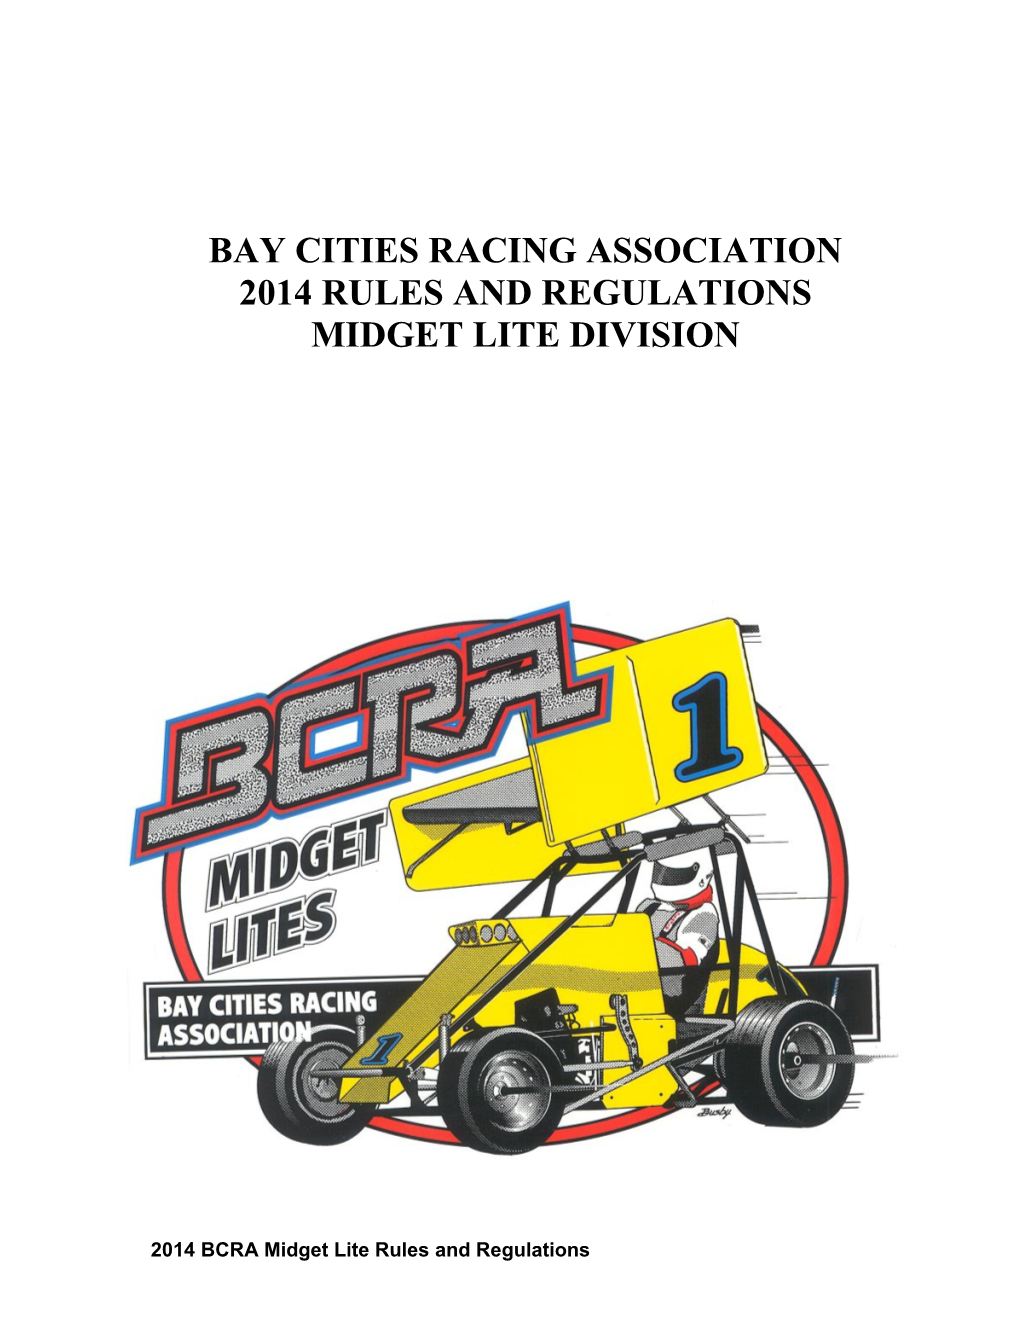 Bay Cities Racing Association 2004 Midget Lite Rules and Regulations